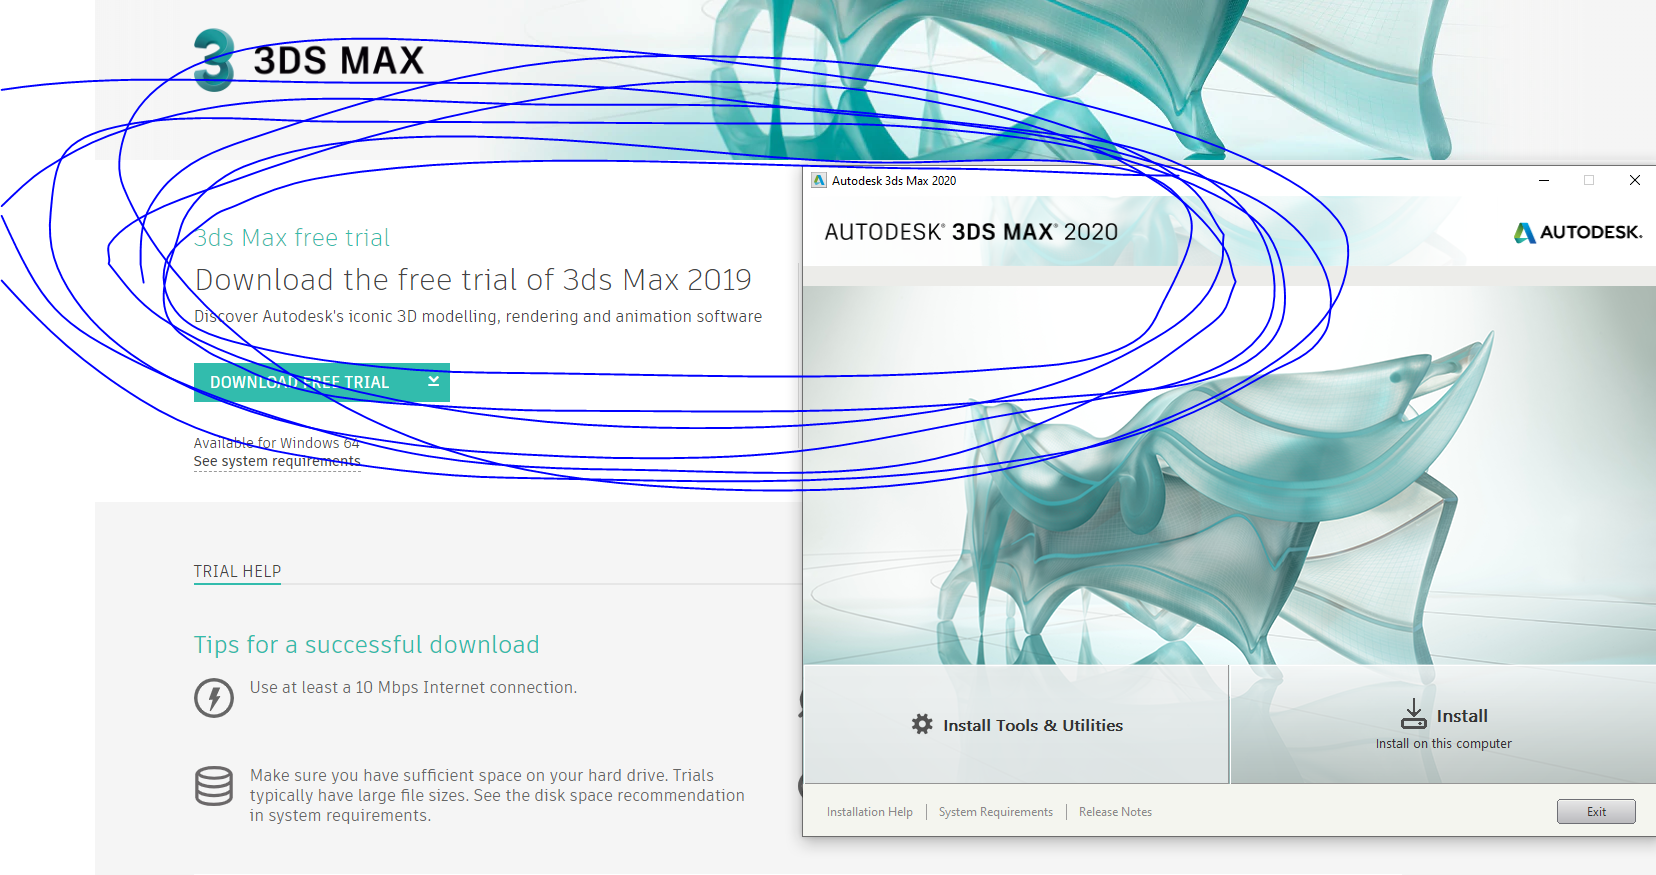 Kviksølv Stort univers pære Downloading Max trial 2019 downloads 2020 instead - Autodesk Community - 3ds  Max